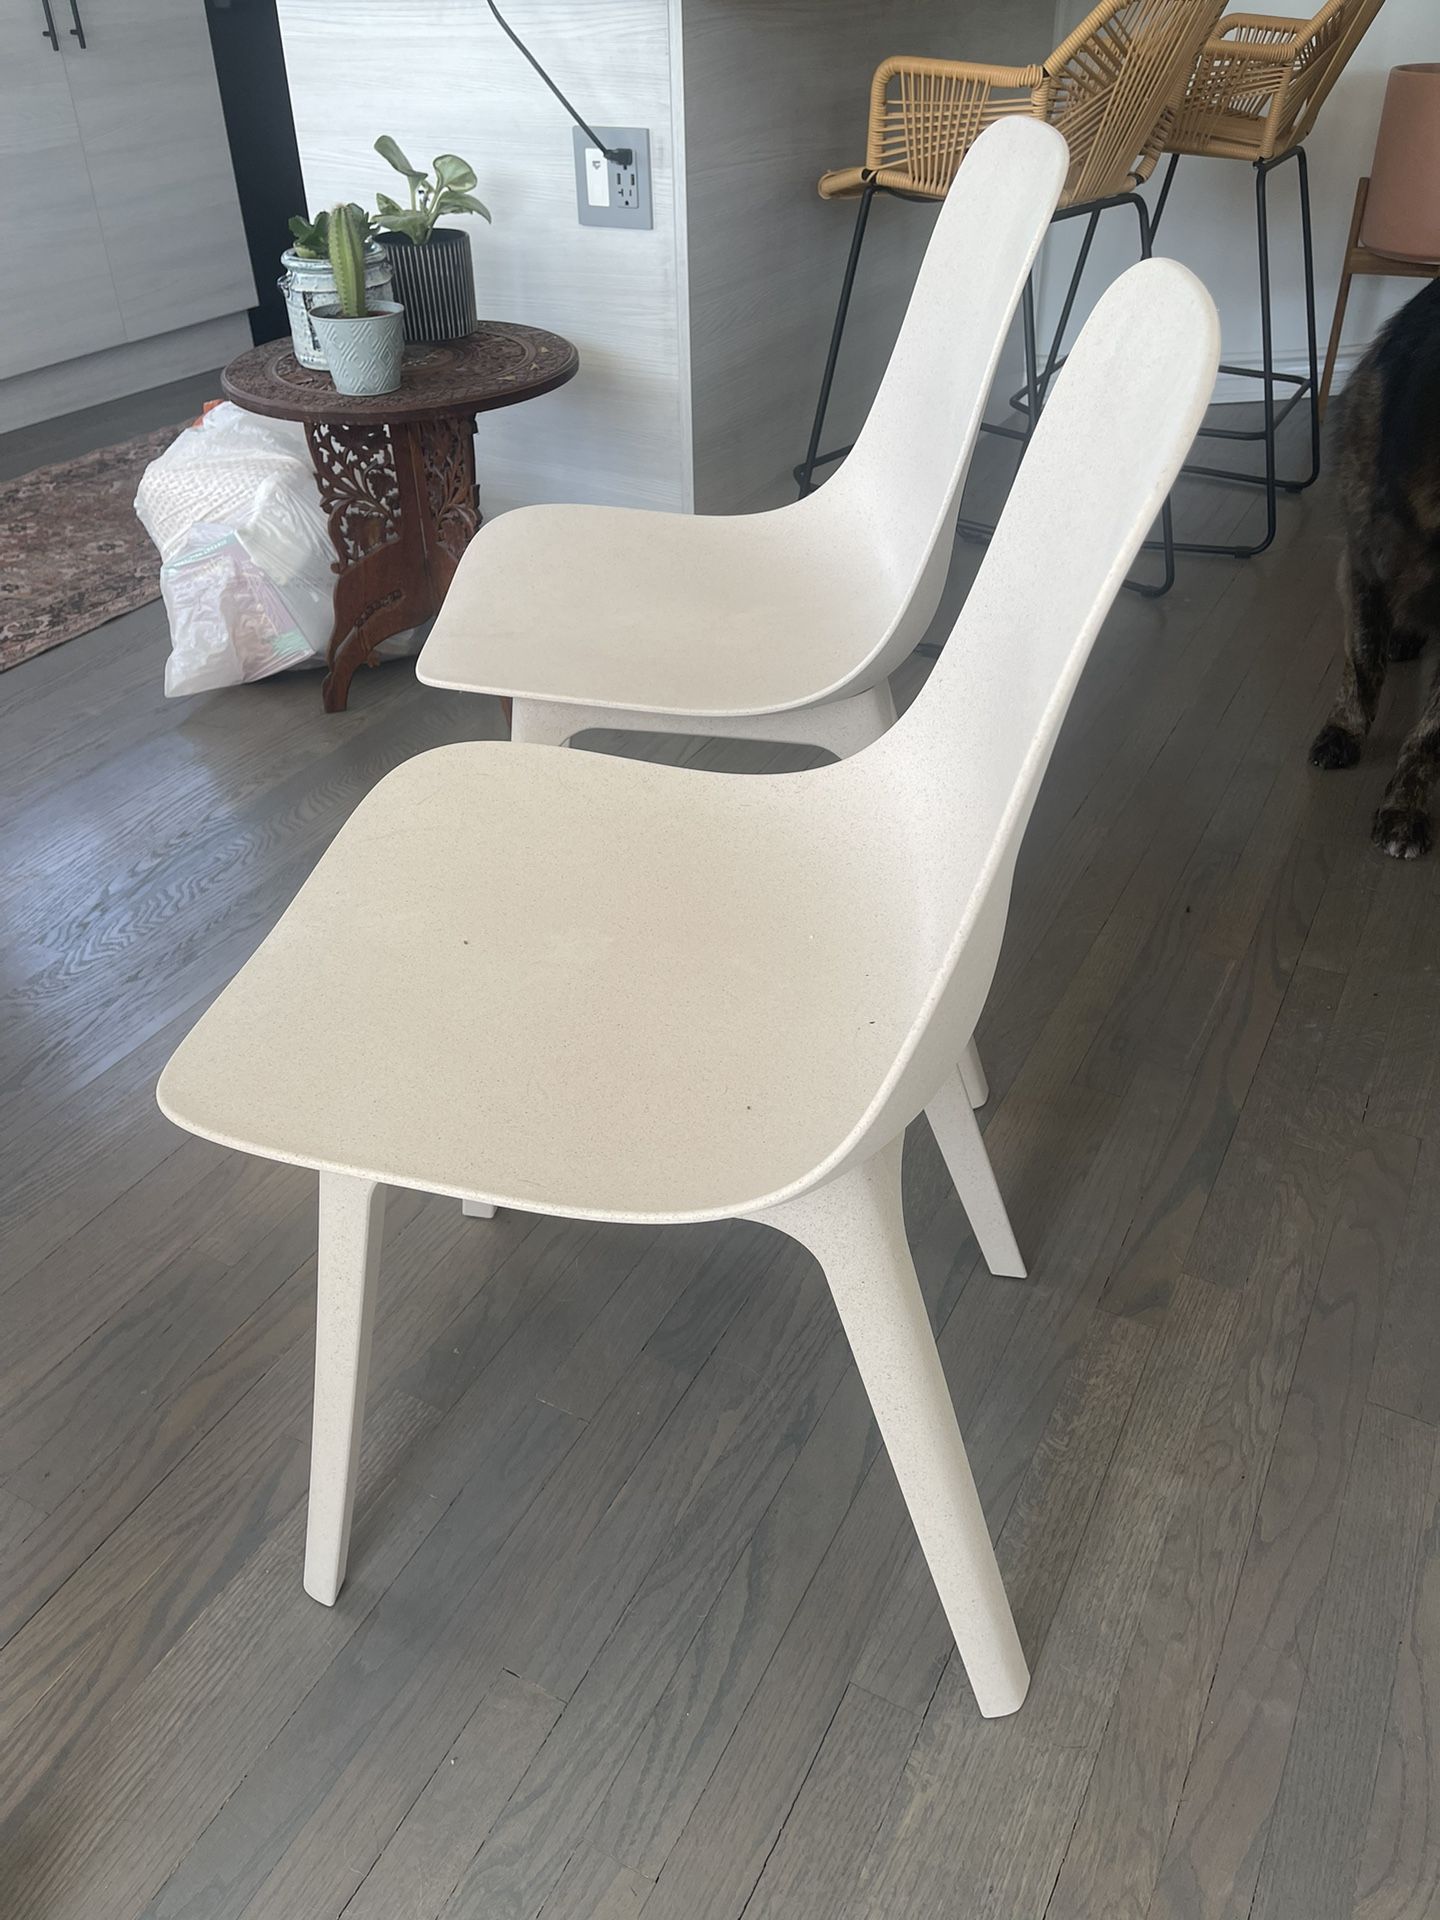 Ikea Chair, white, Glose off-white 16204.20115.3434